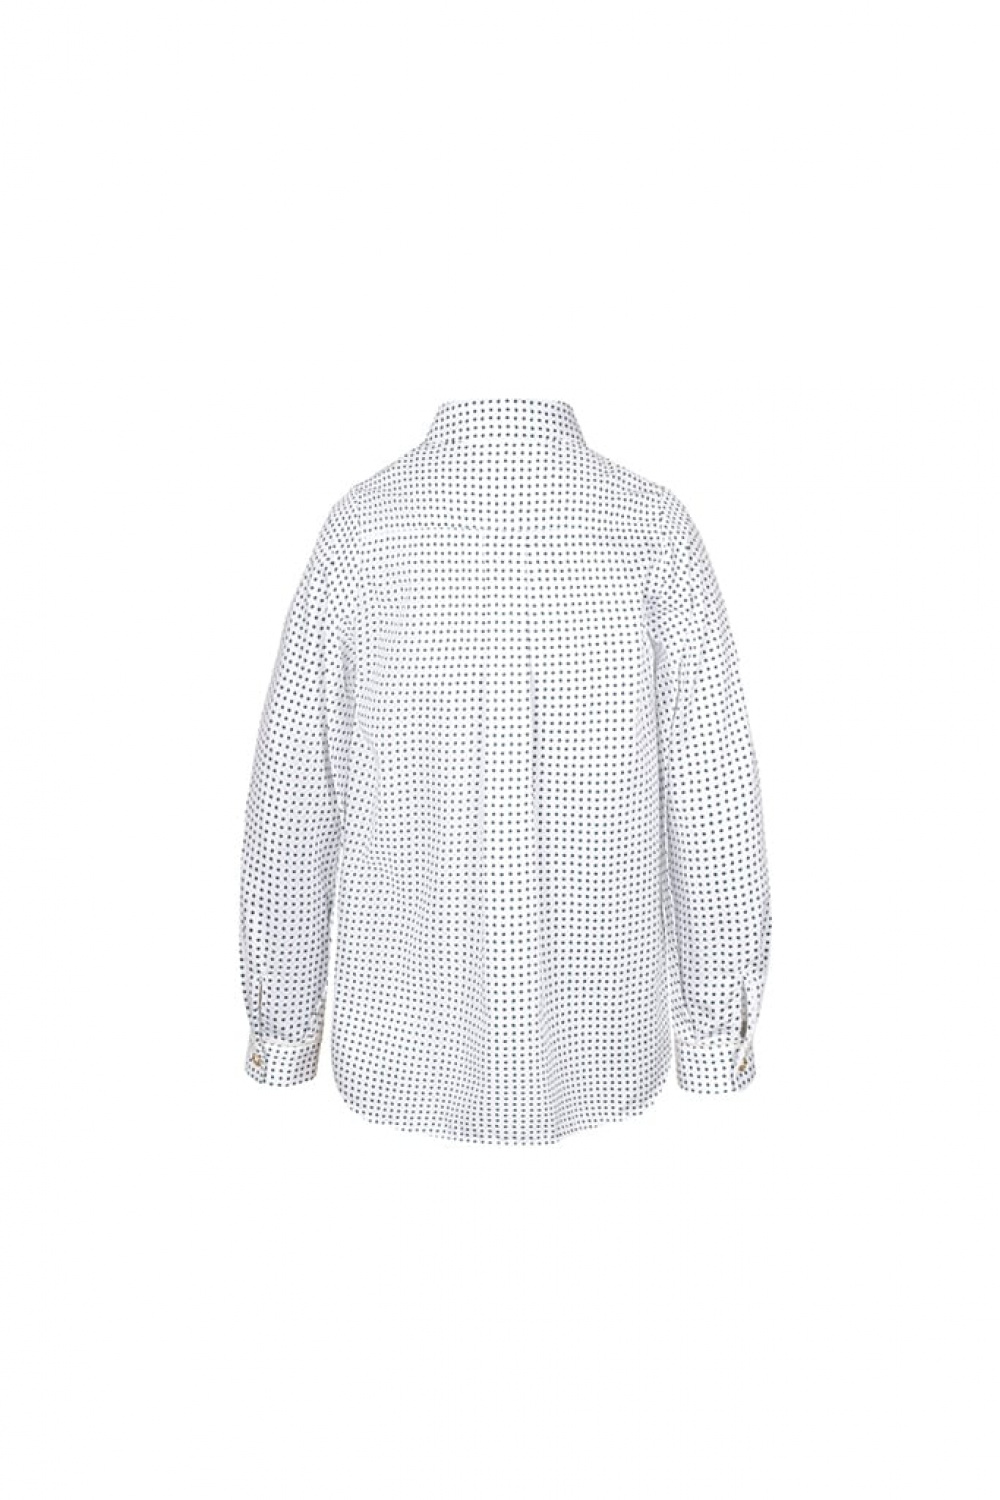 Рубашка из 100% хлопка с принтом (SSLWG-039-23025-963) Silver spoon